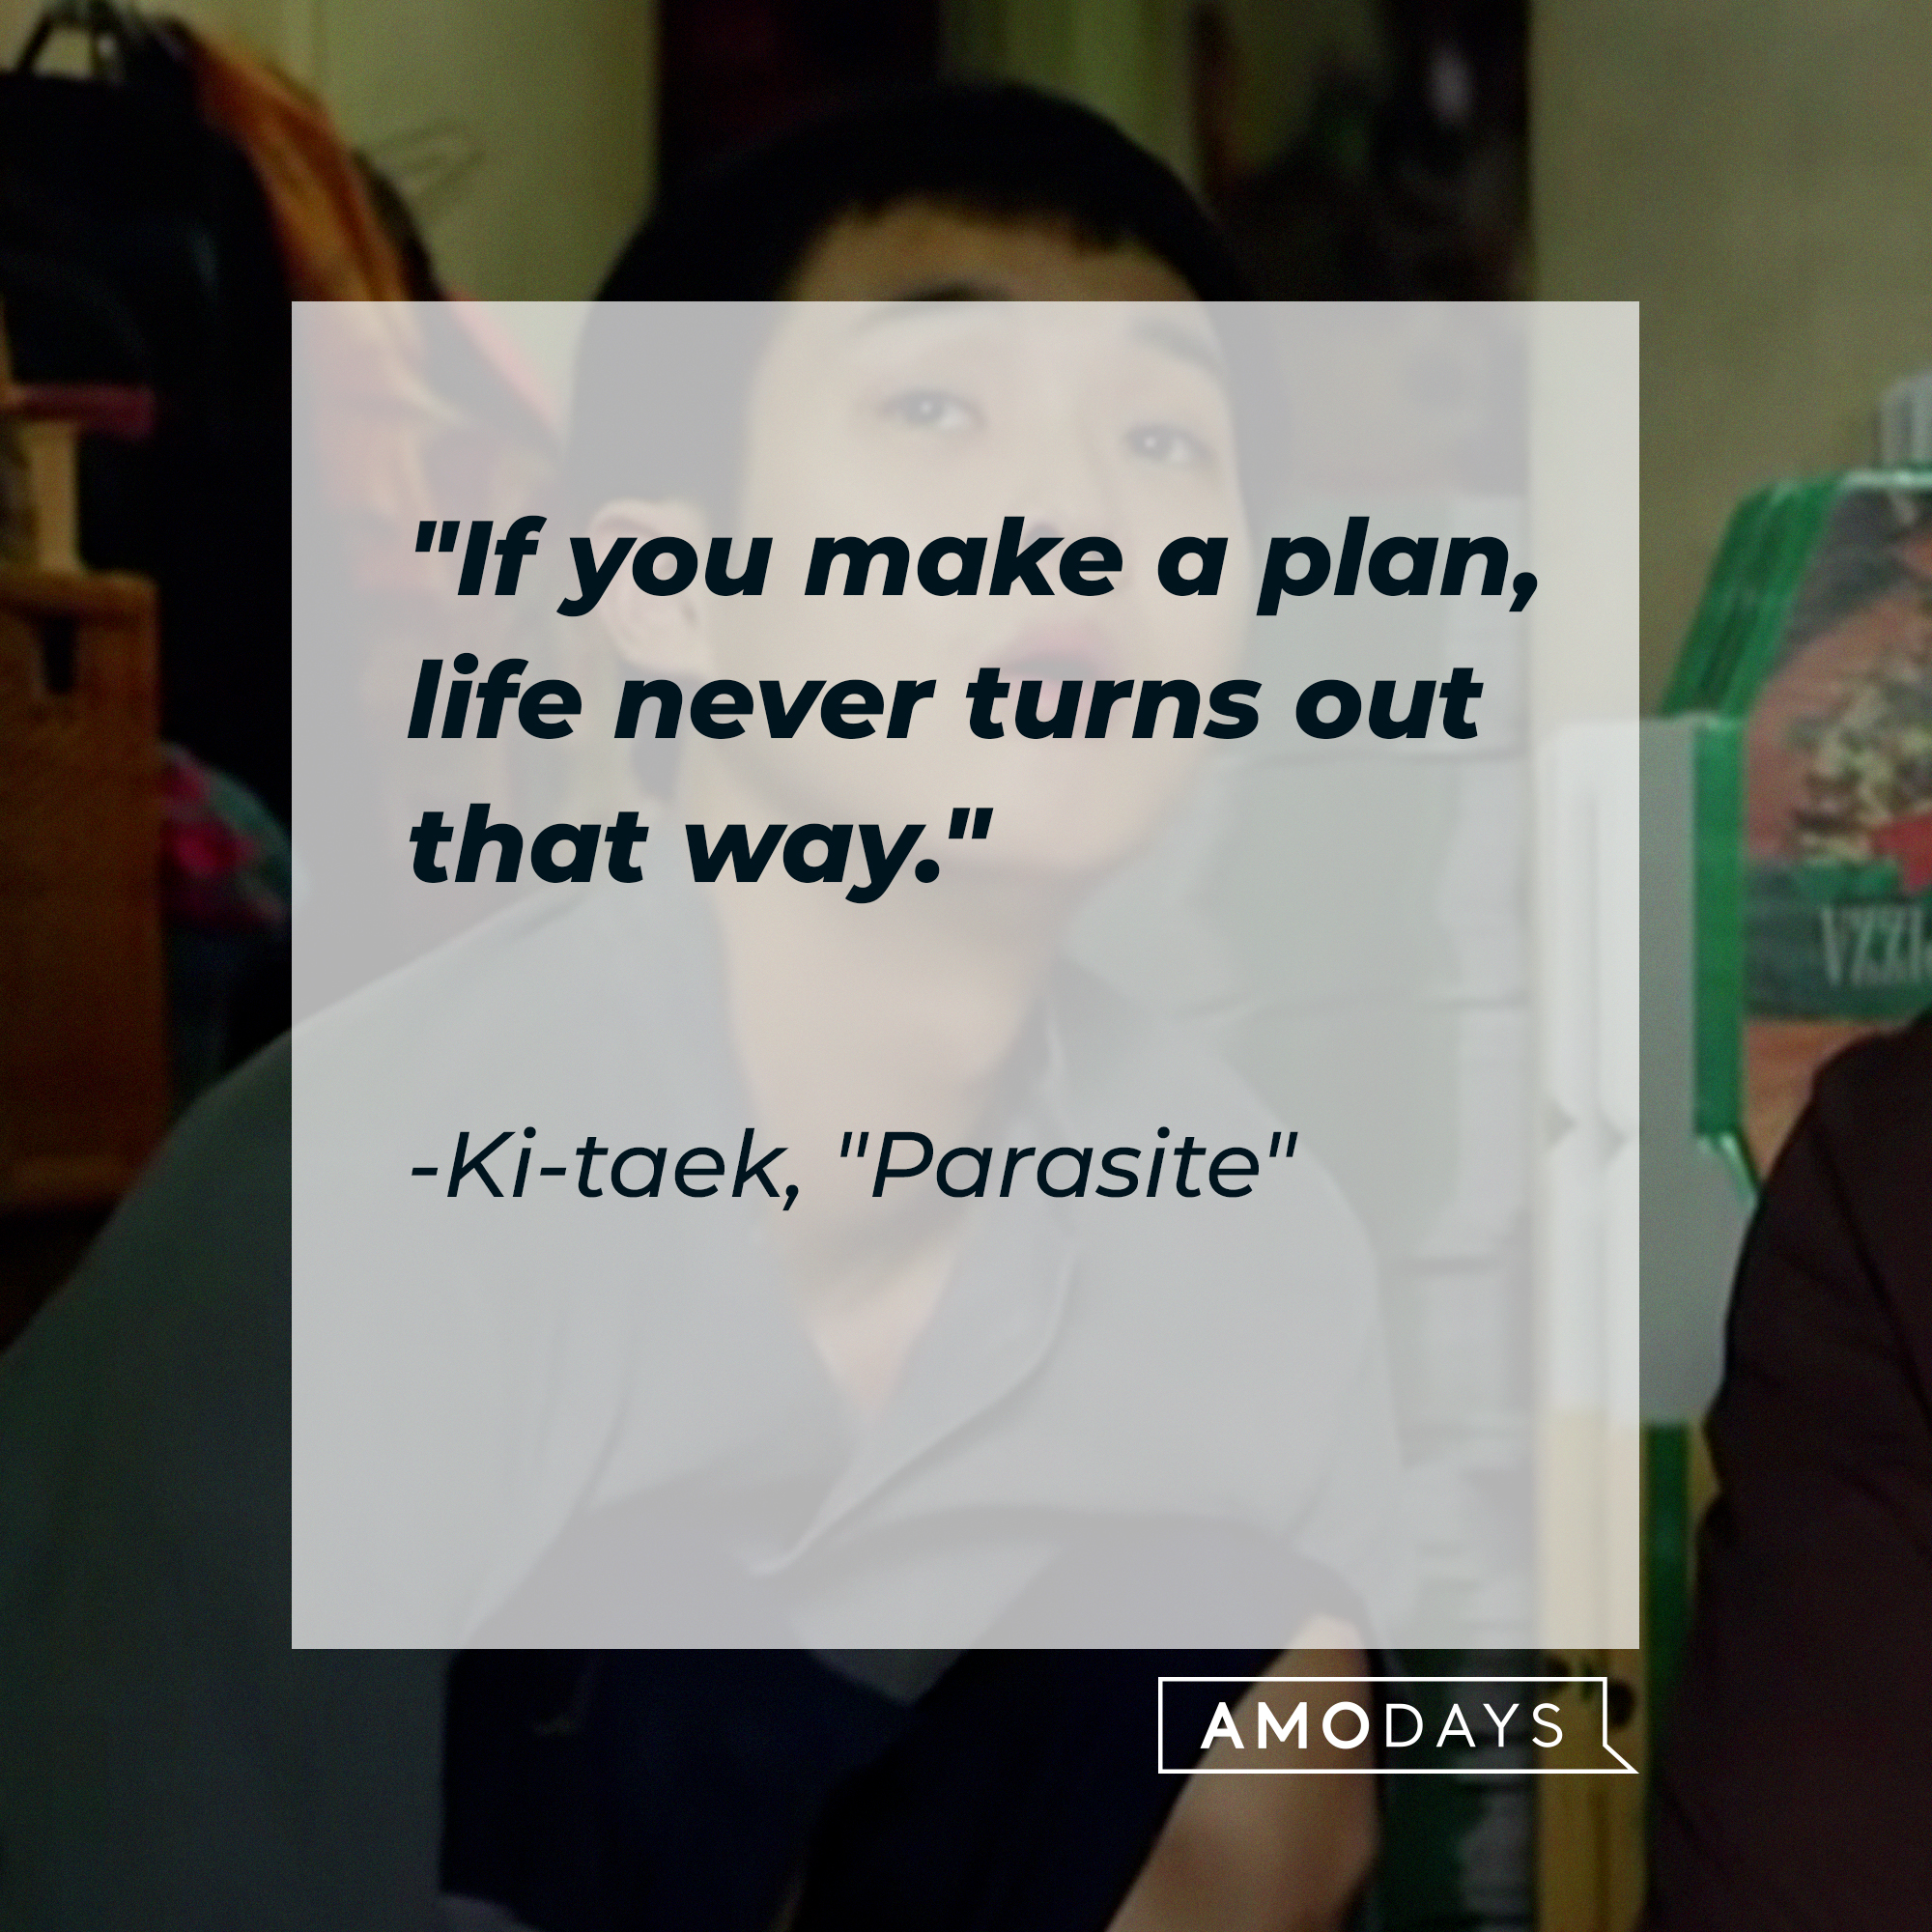 Ki-woo with Ki-taek's quote: "If you make a plan, life never turns out that way." | Source: Facebook.com/ParasiteMovie